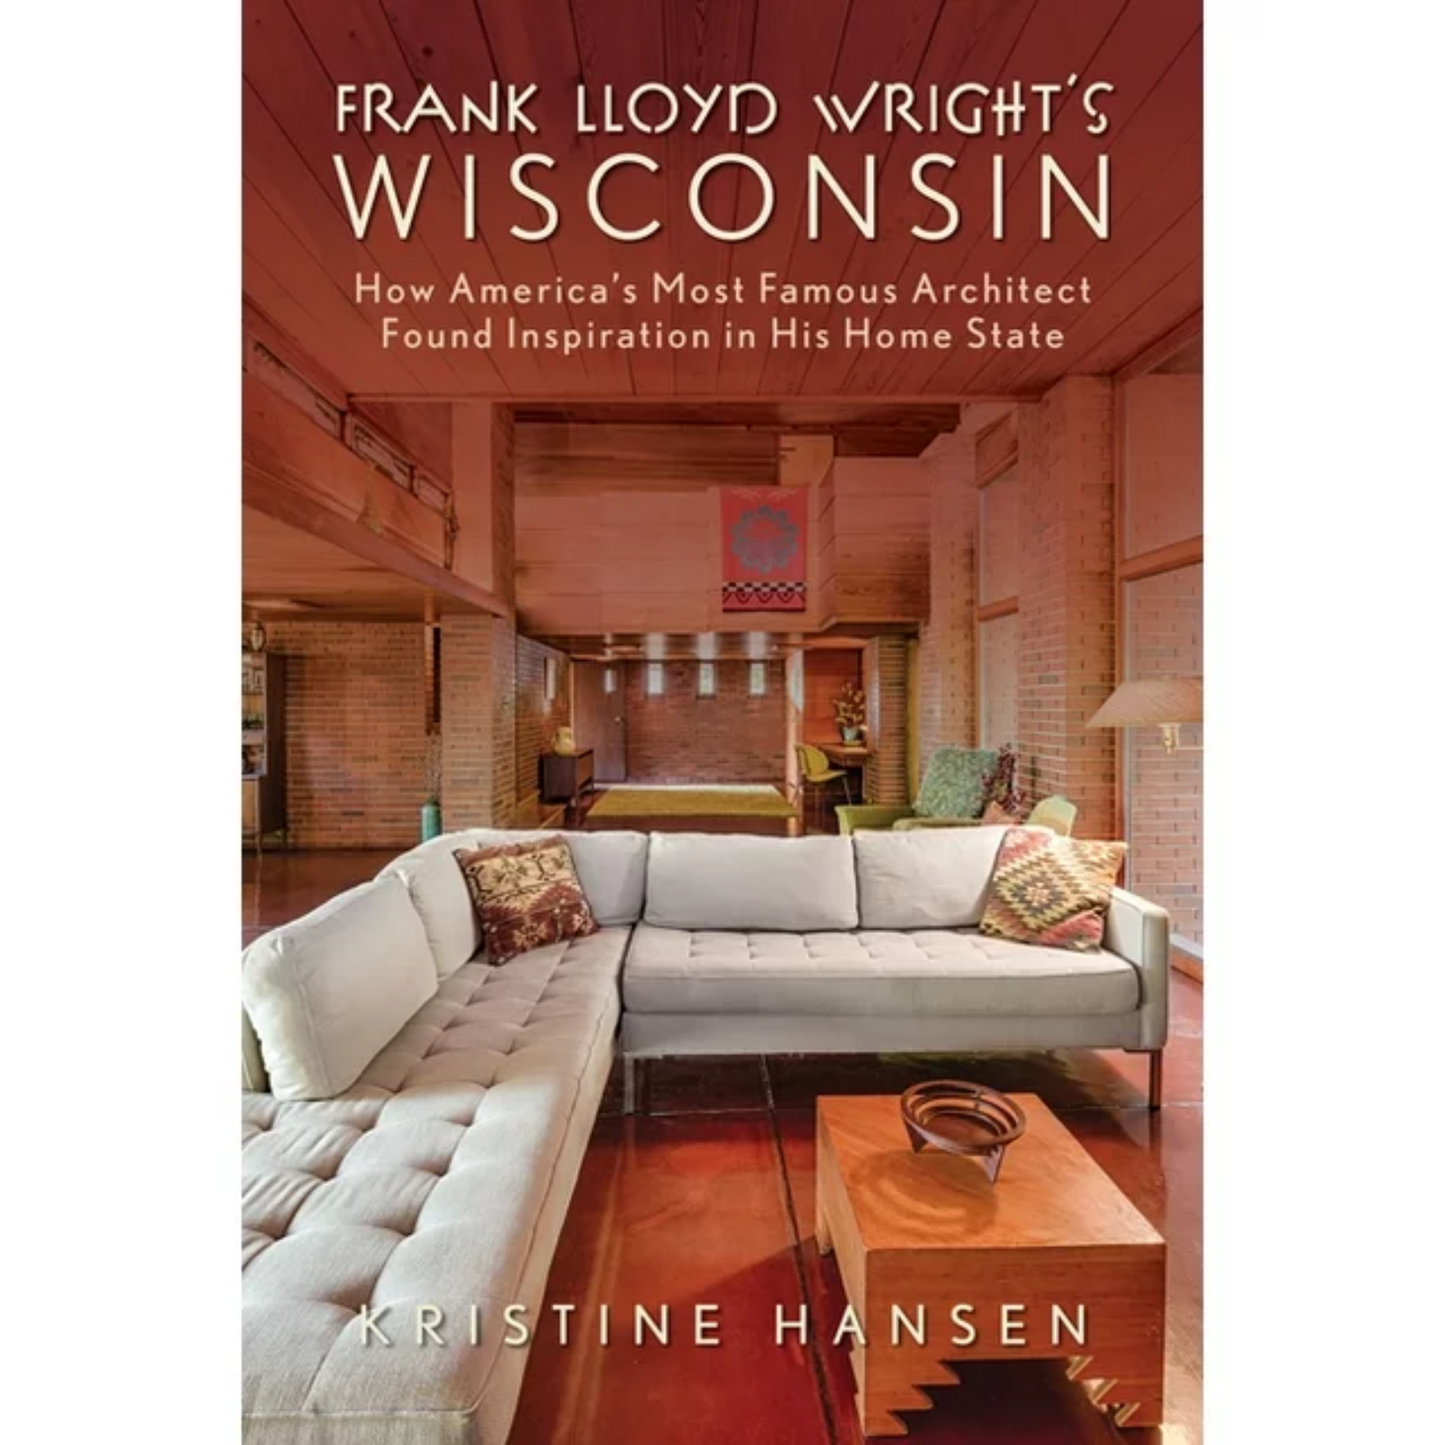 Frank Lloyd Wright's Wisconsin